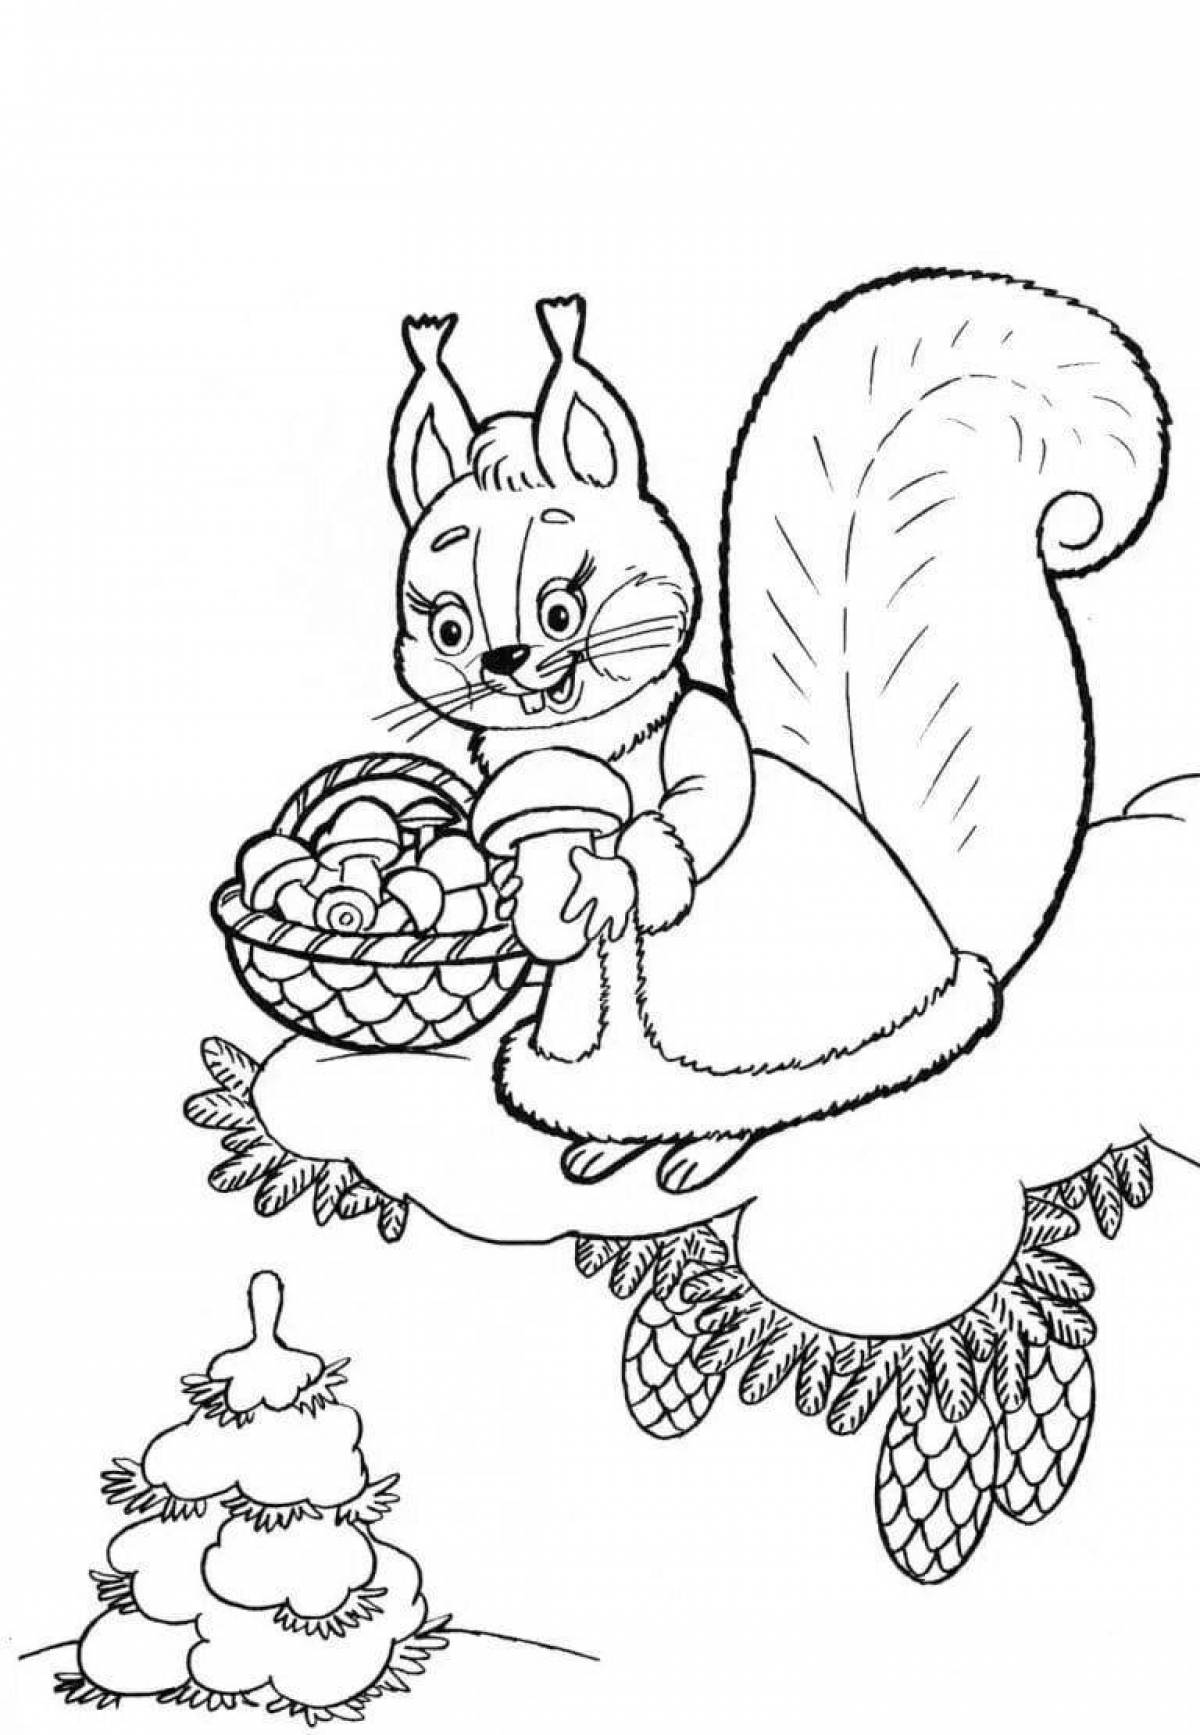 Wonderful winter squirrel coloring book